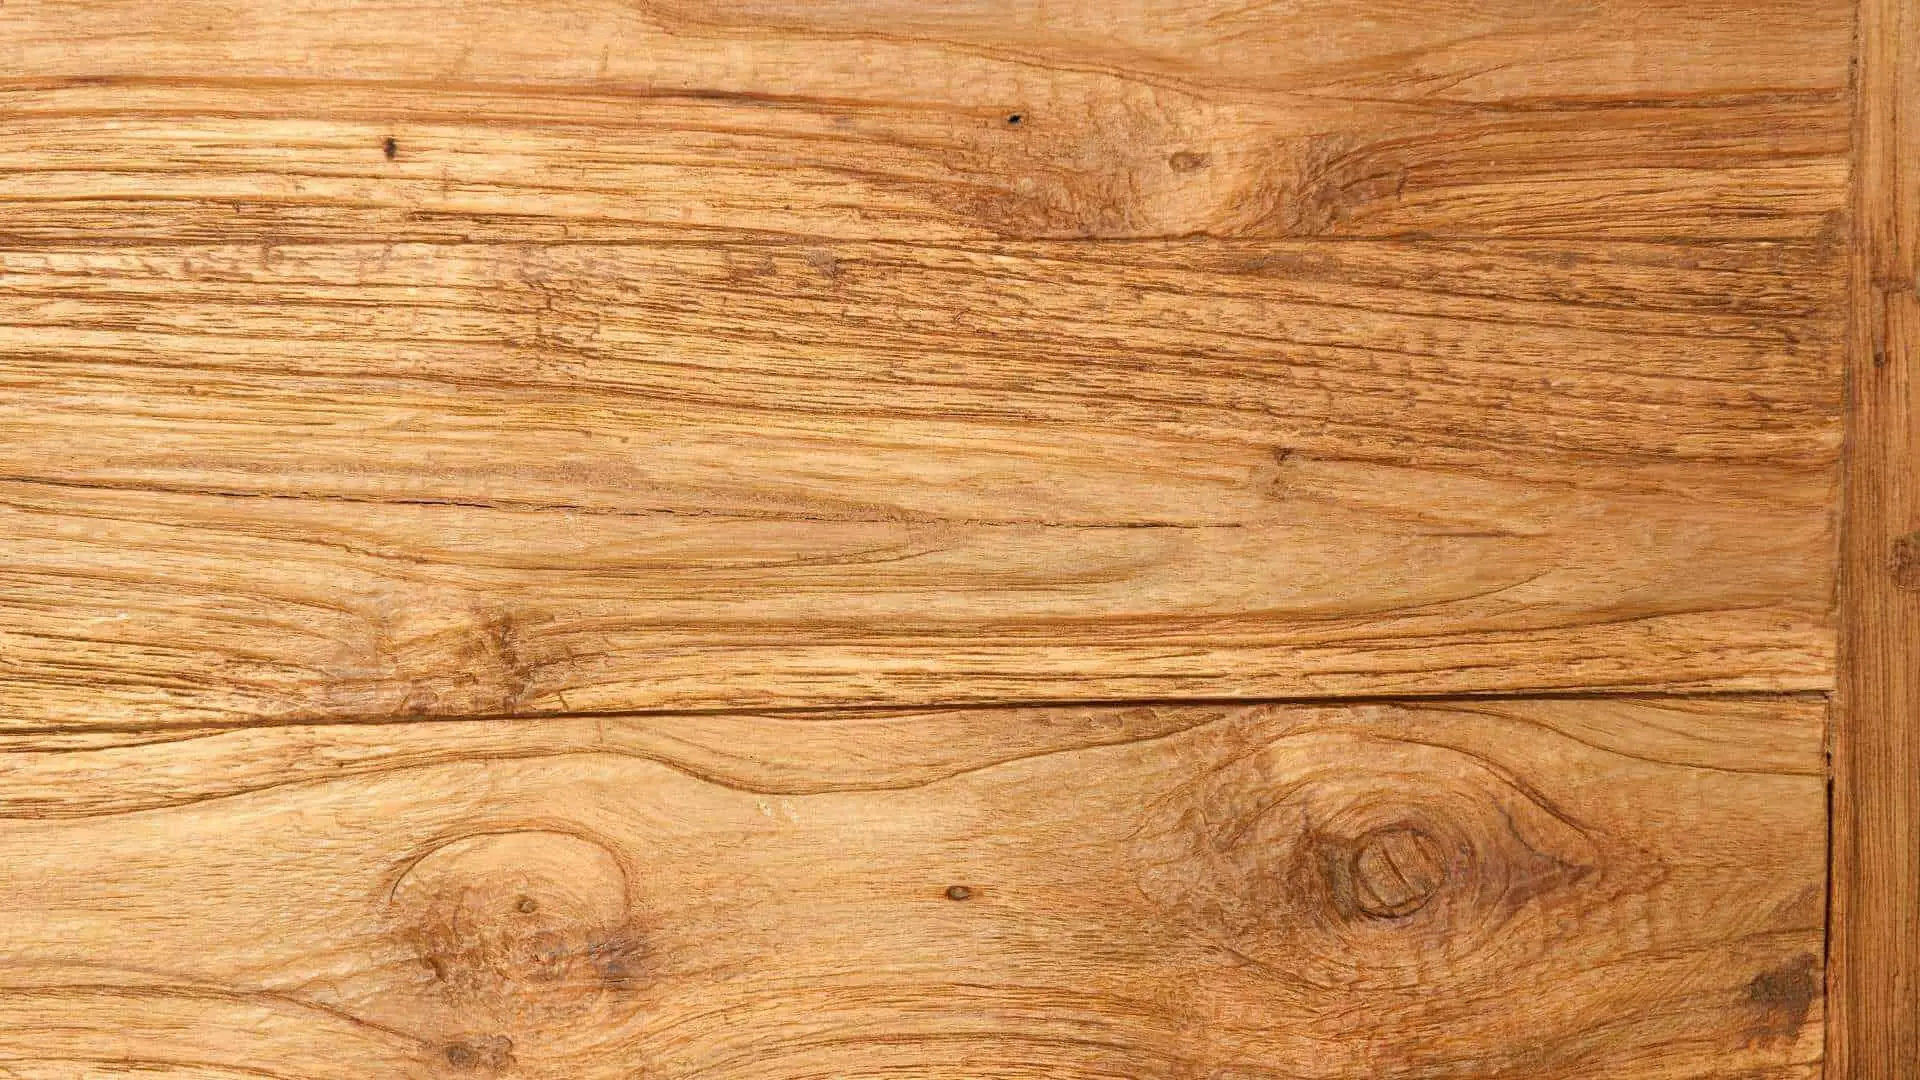 what is hand scraped hardwood flooring